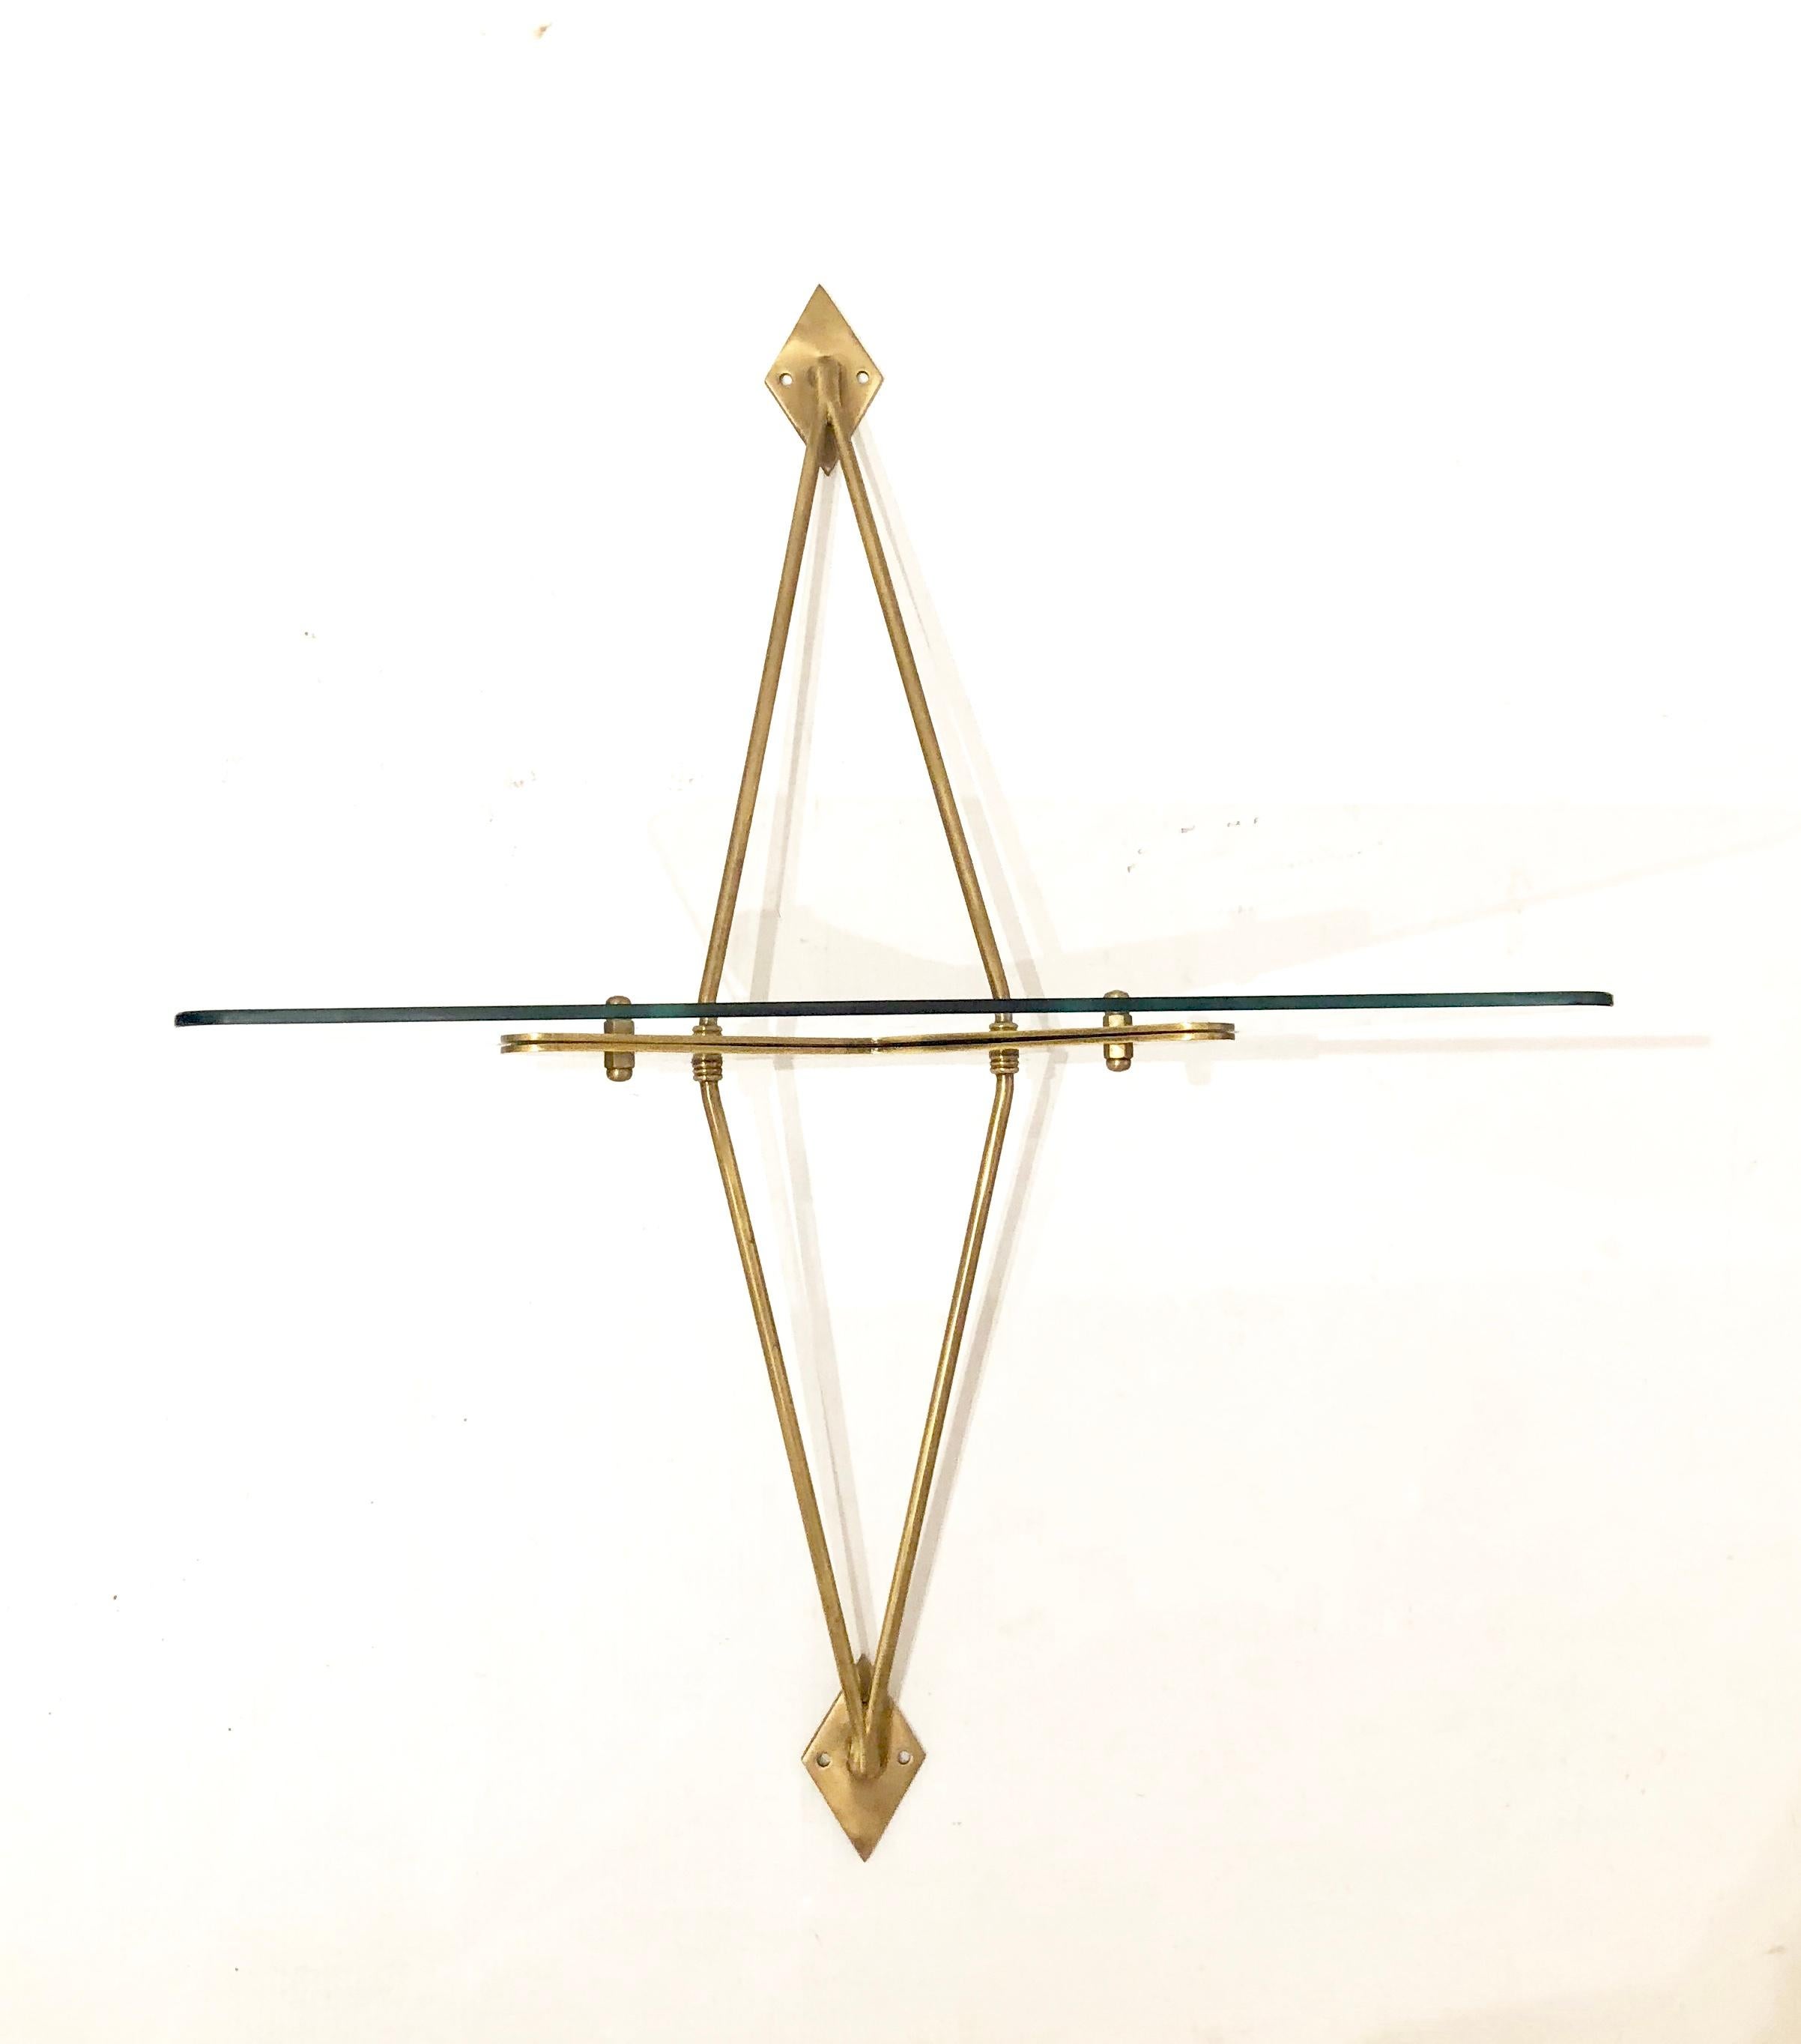 Italian Brass and Glass Wall-Mounted Angle Display Shelf Attributed to Fontana Arte